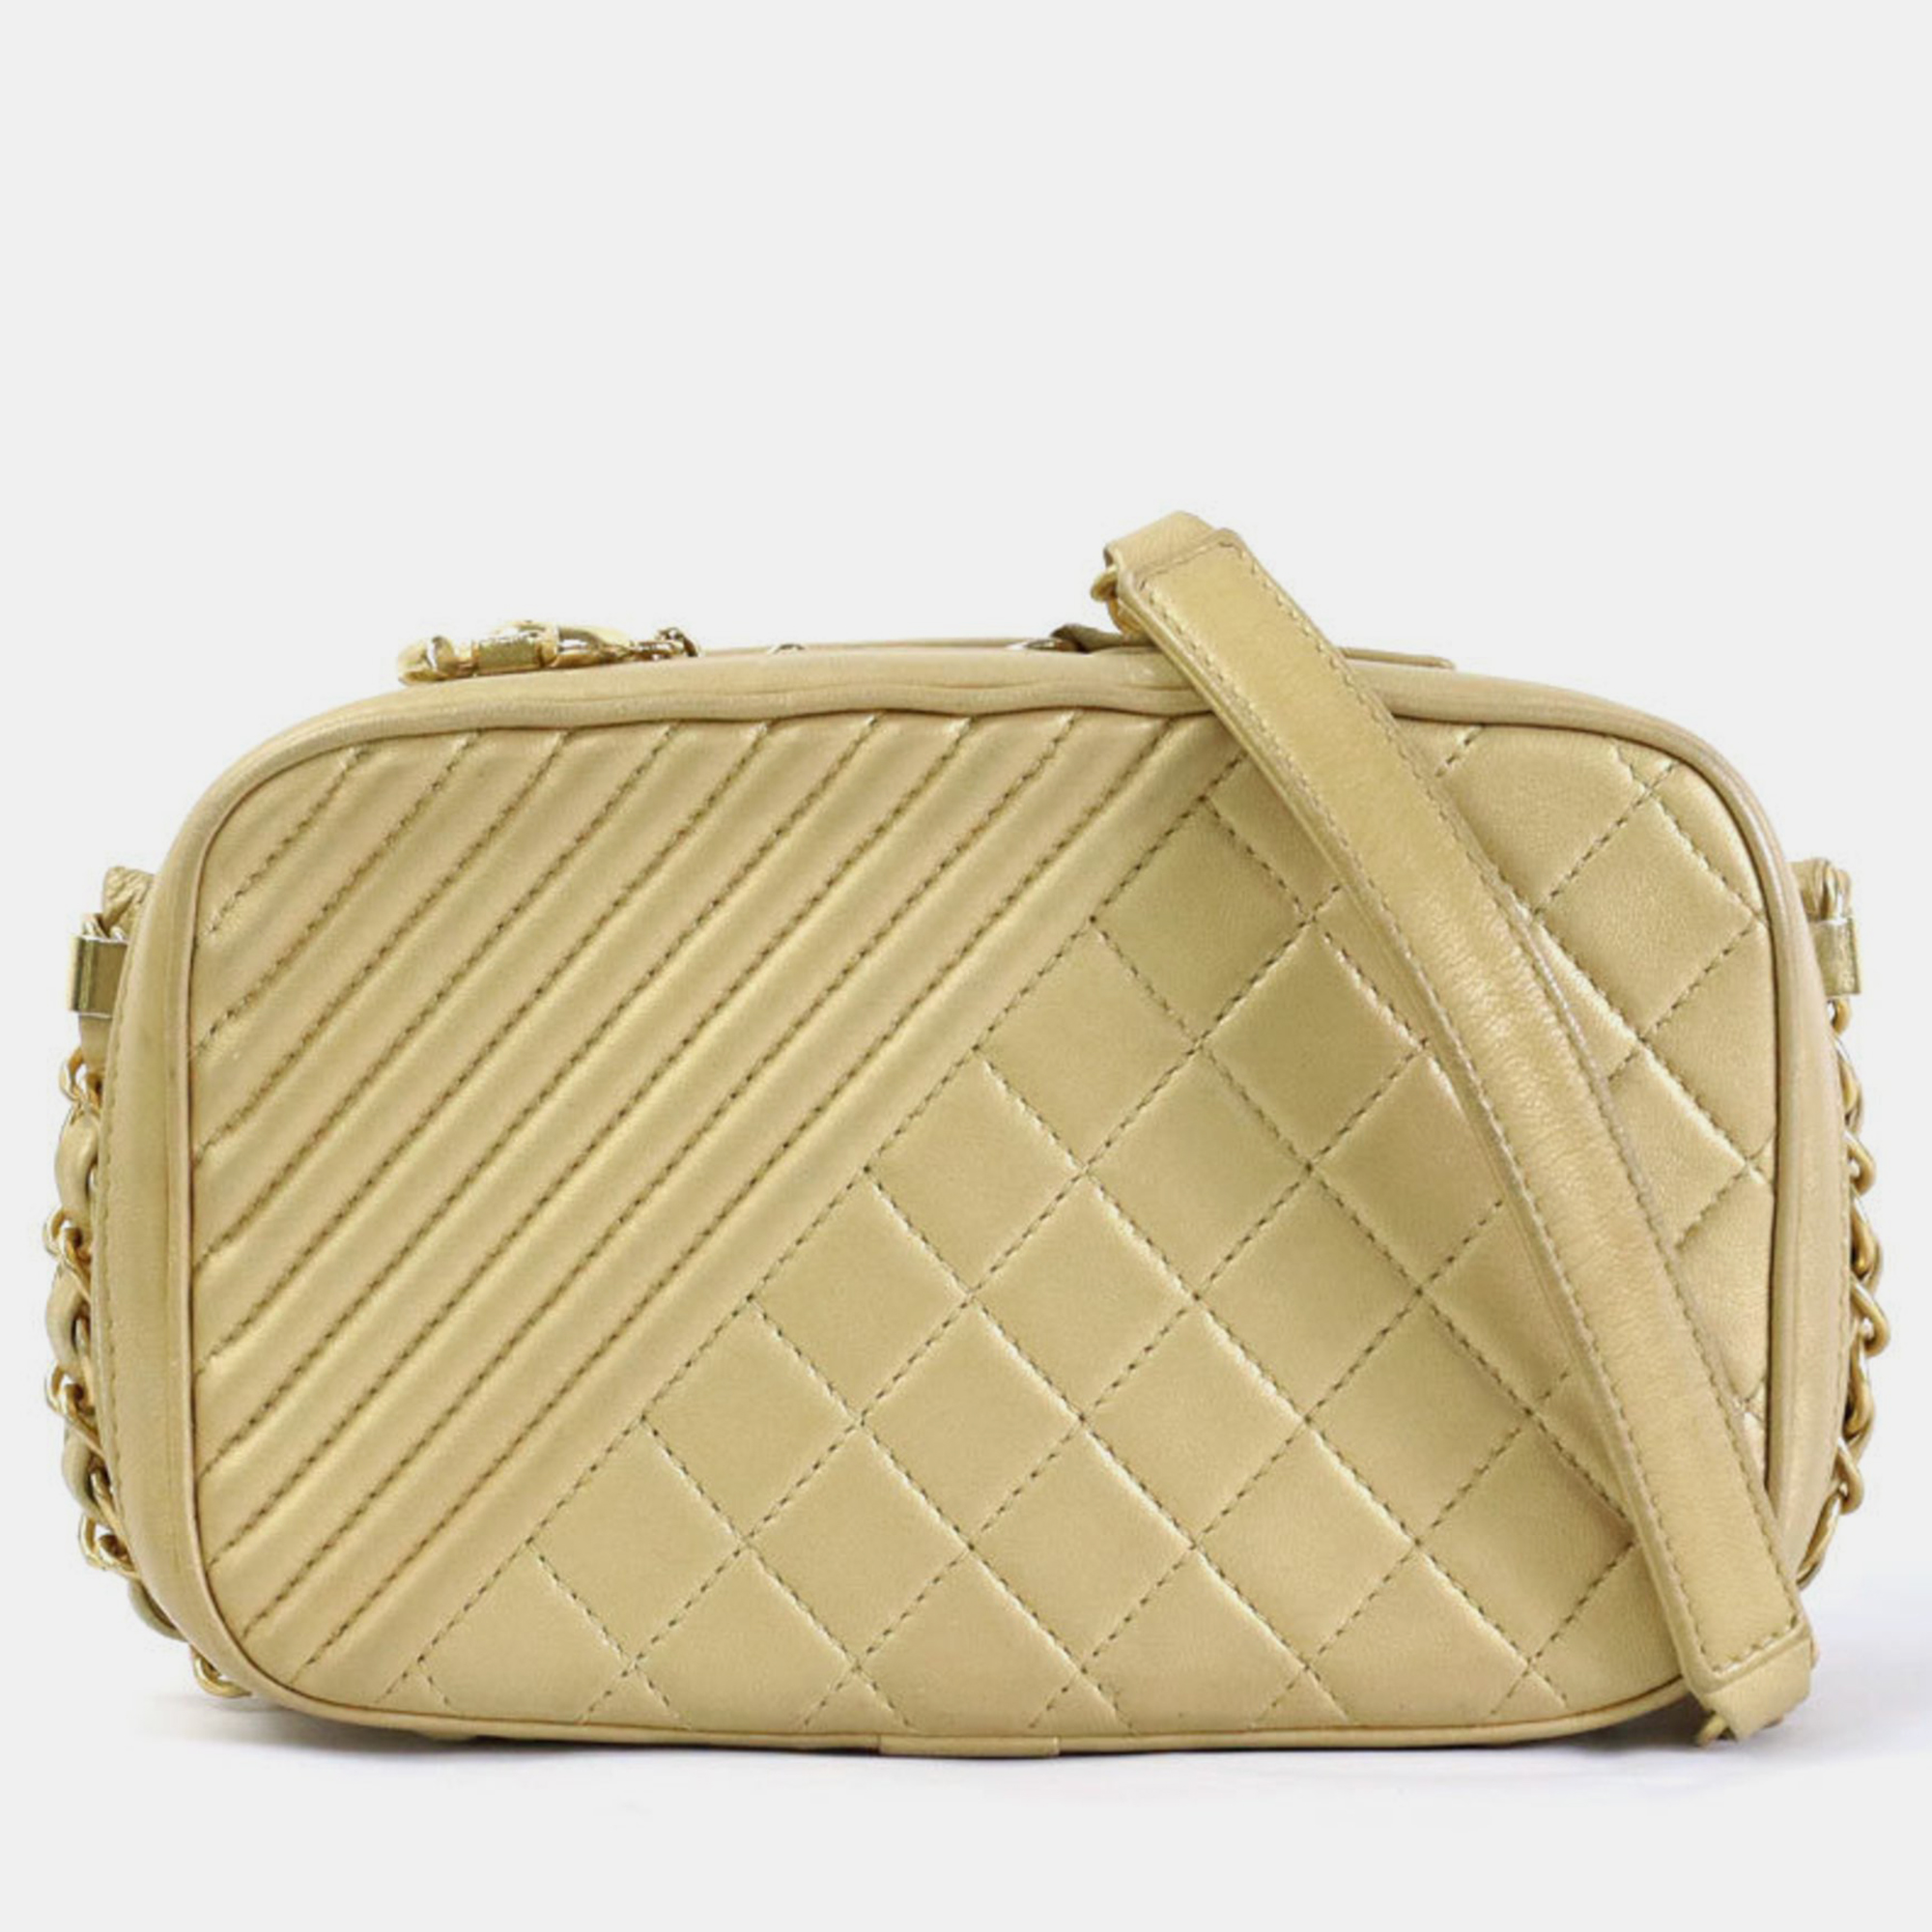 Chanel gold leather coco boy camera bag